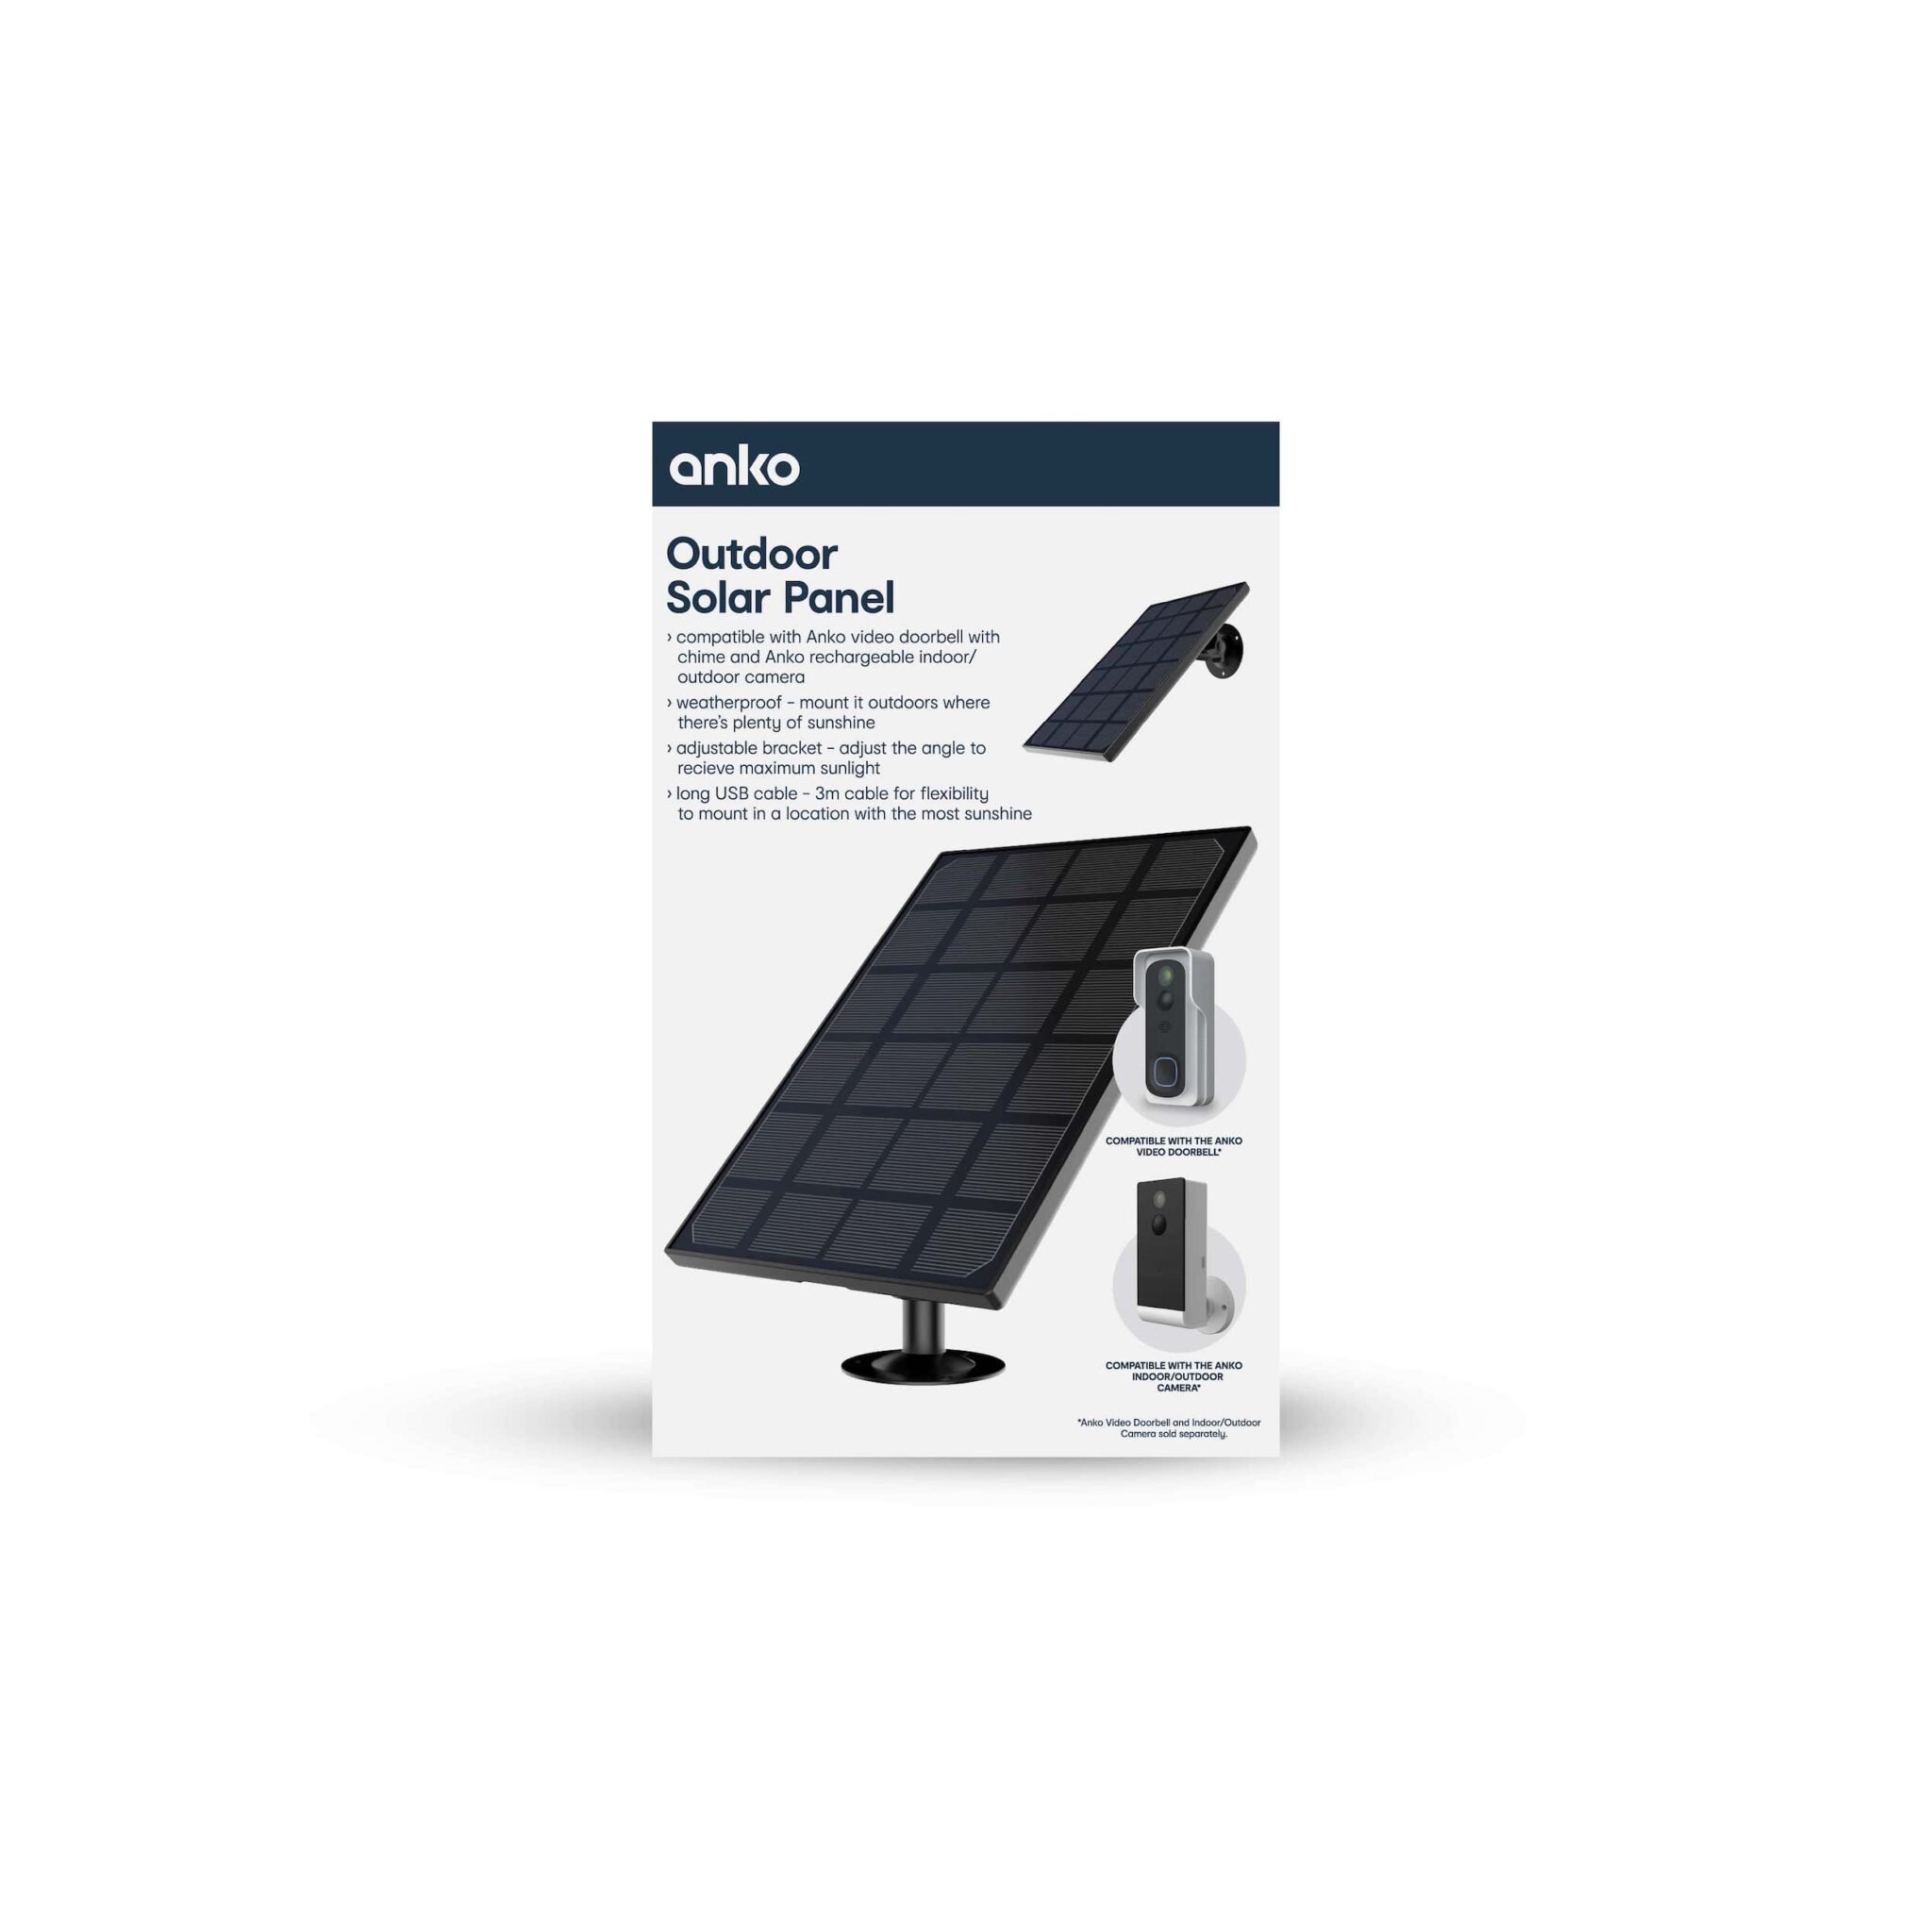 Anko Outdoor Solar Panel - Mirabella Genio - Smart Home